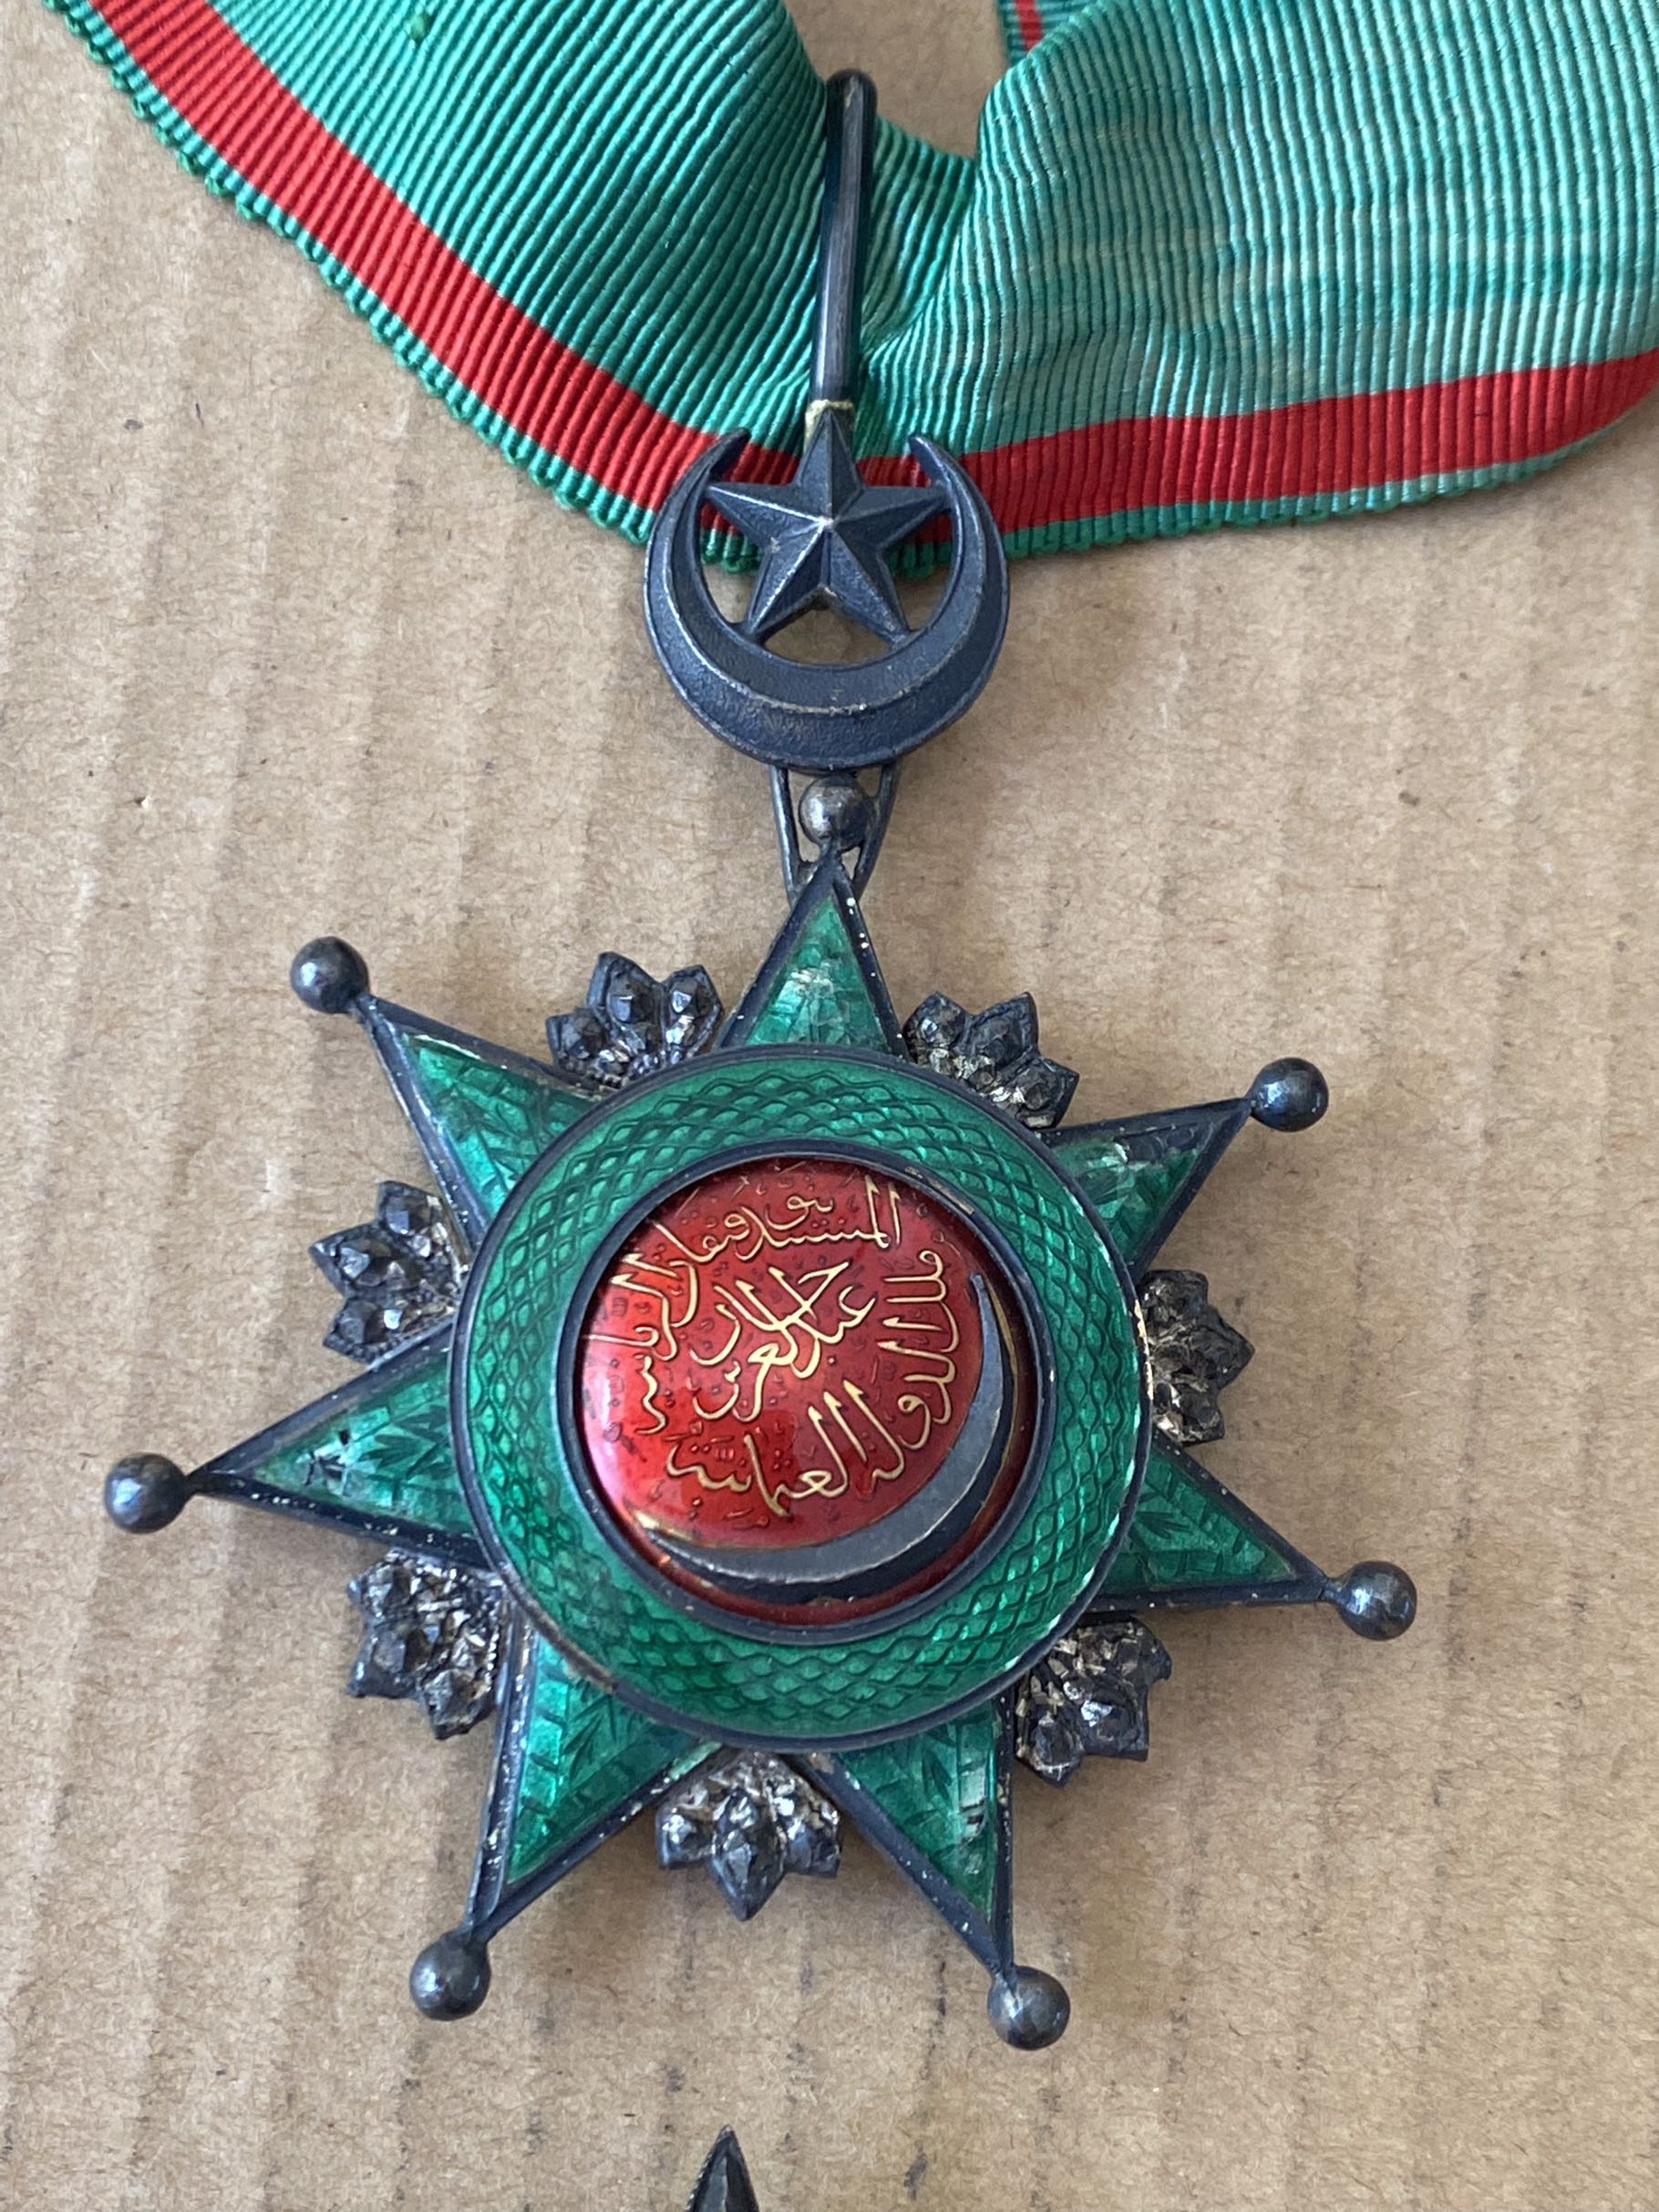 Ottoman Empire Turkey Order of Osmanieh 2nd Class Medal Badge Nishan-i-Osmanieh